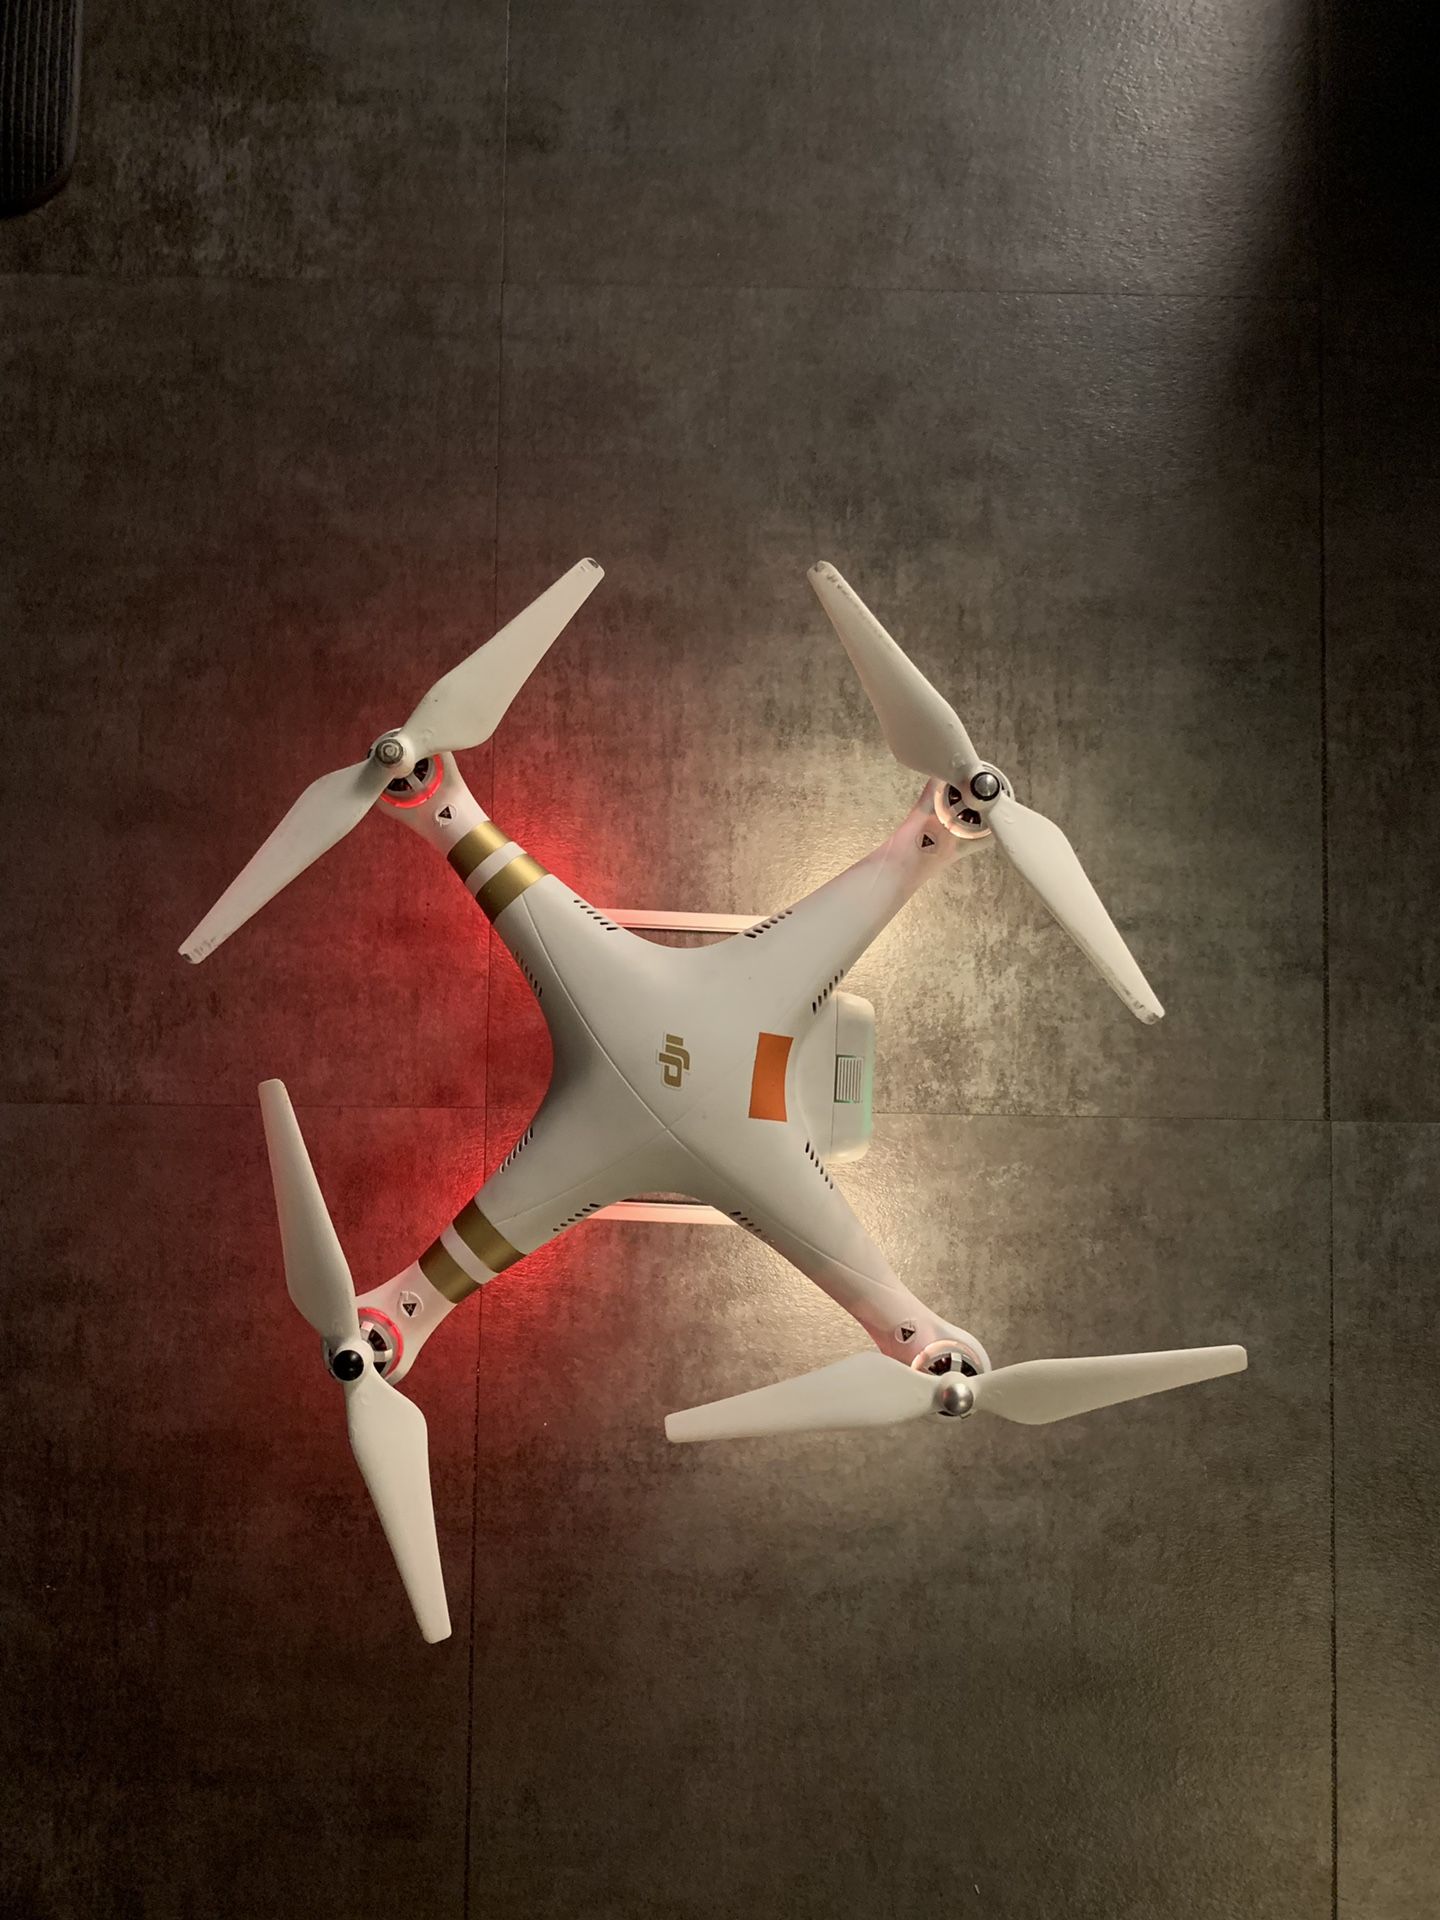 DJI Phantom 3 Pro Great drone for beginners !